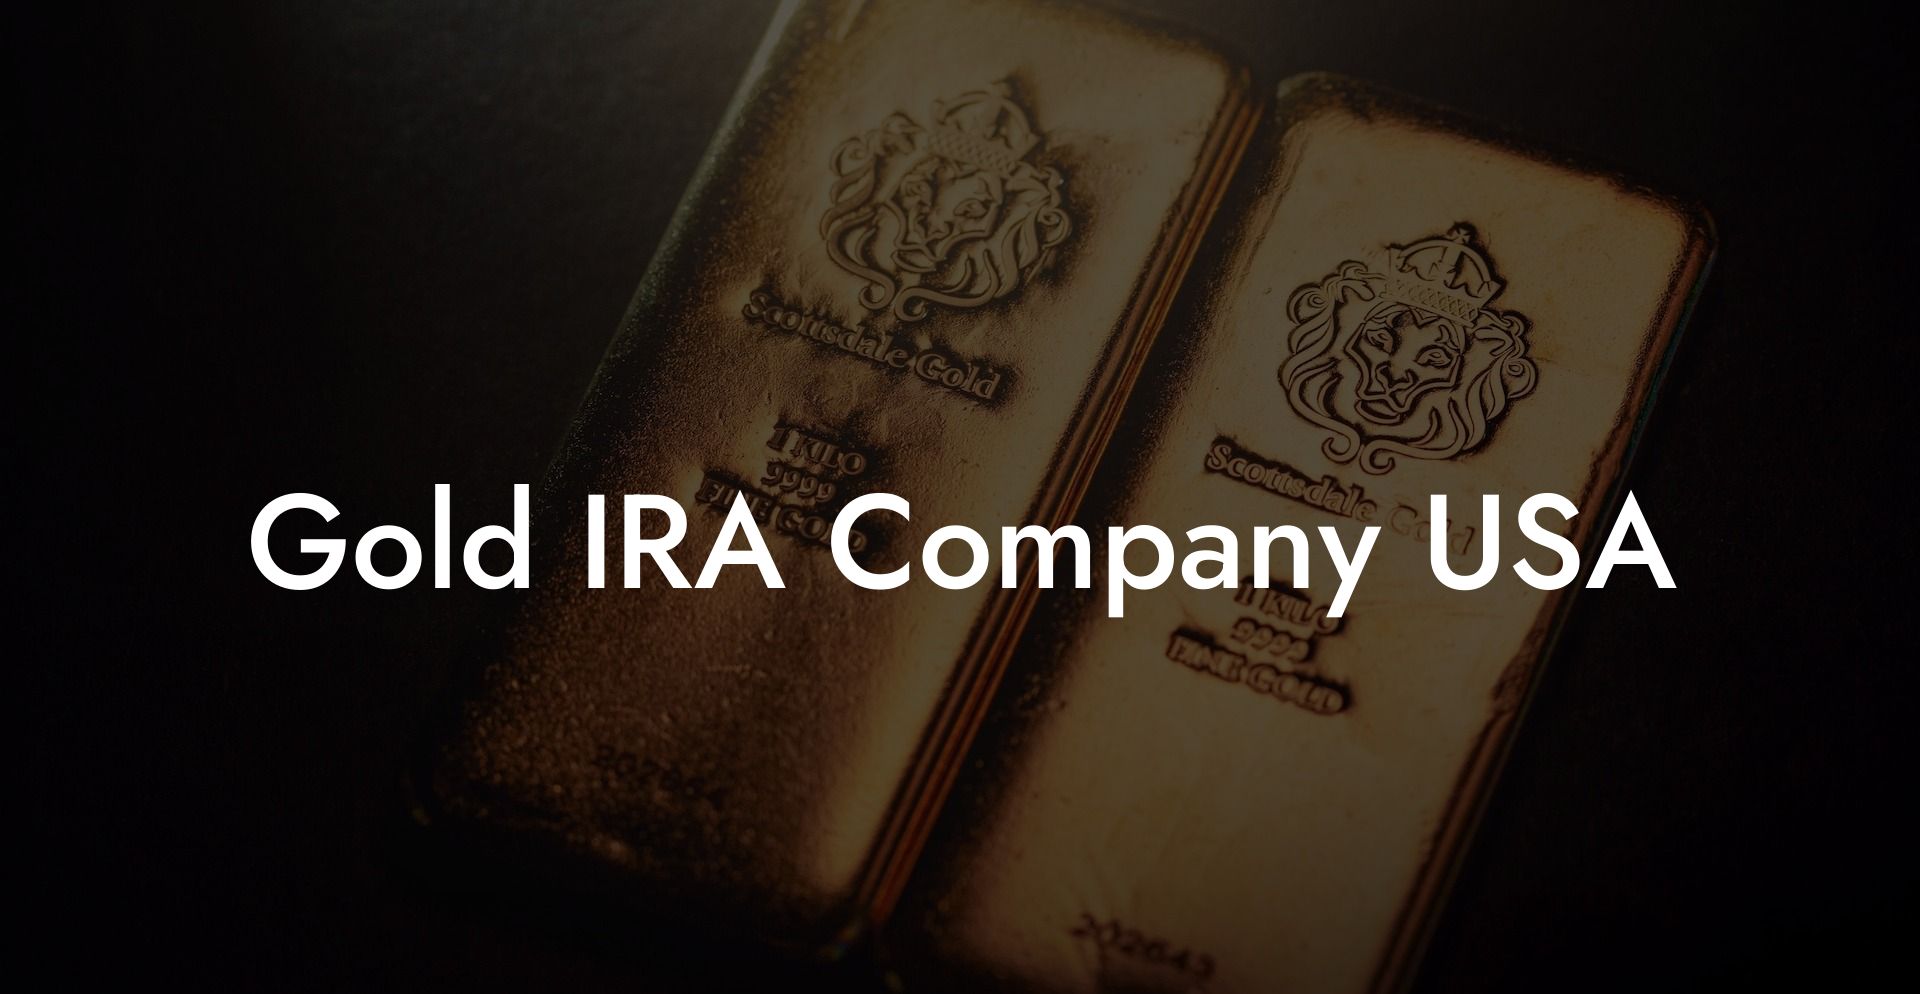 Gold IRA Company USA